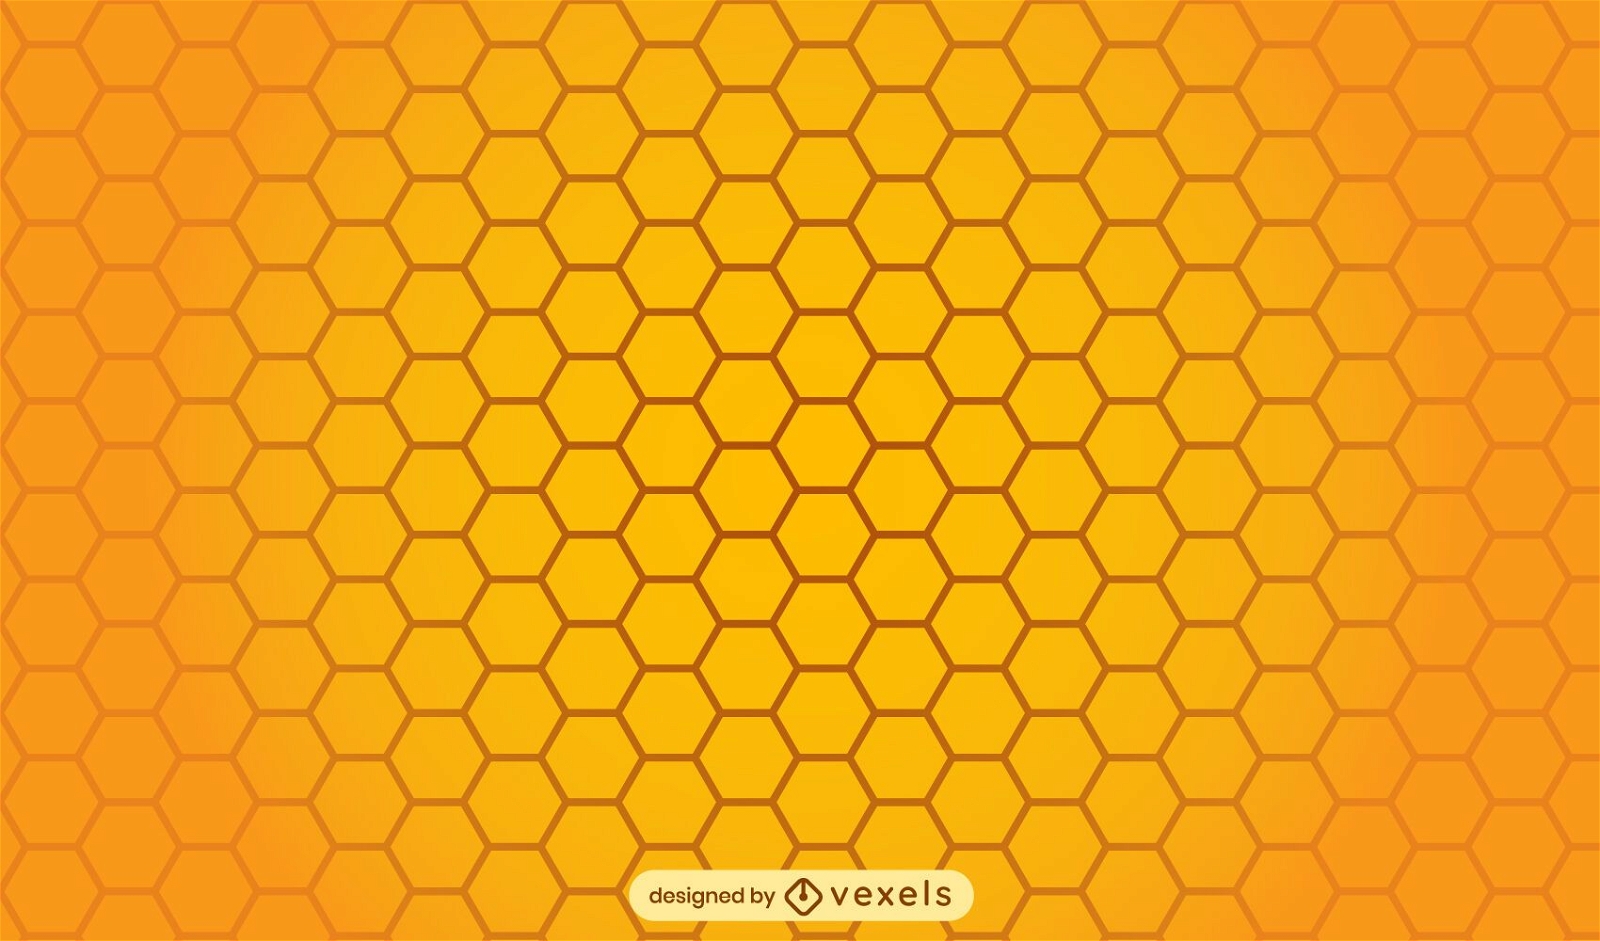 Honeycomb bee pattern design